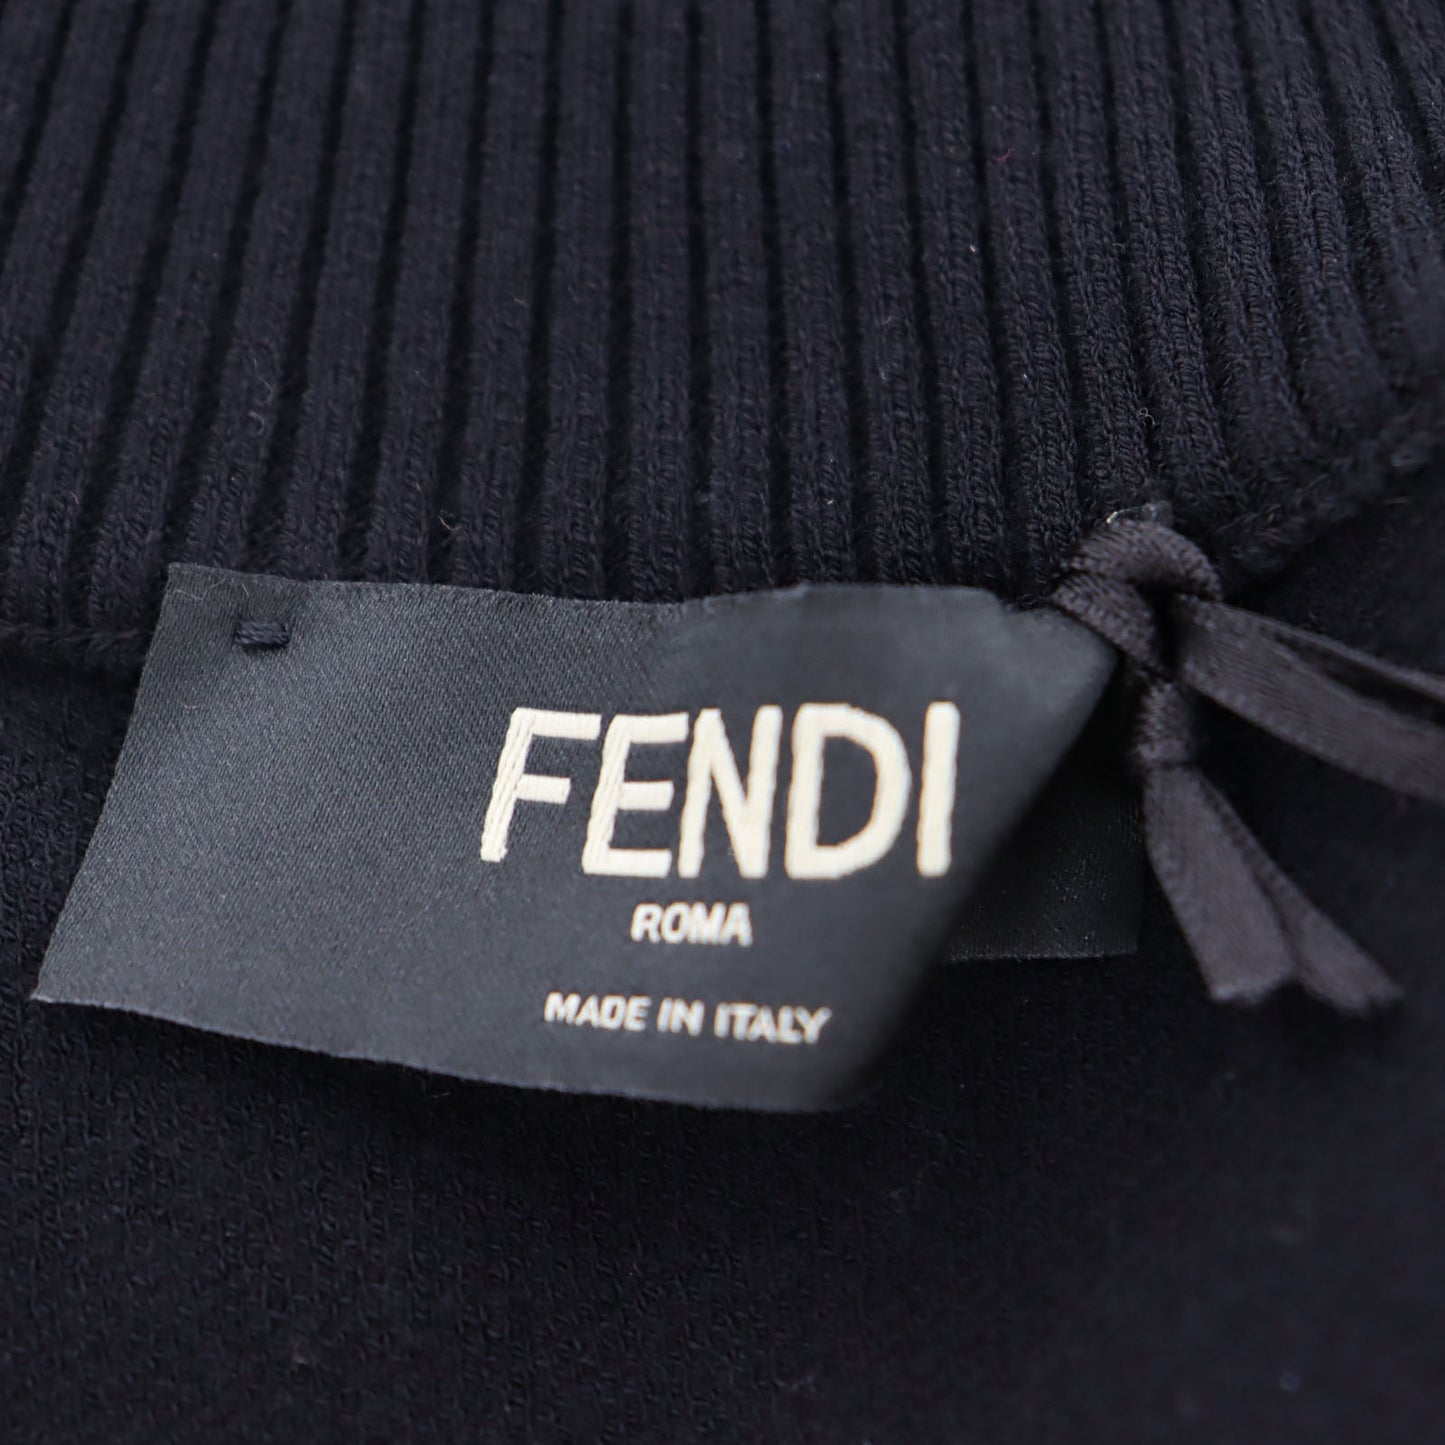 FENDI Logos Jacket Tops Black Gold Wool 100% Size 50 #AG844